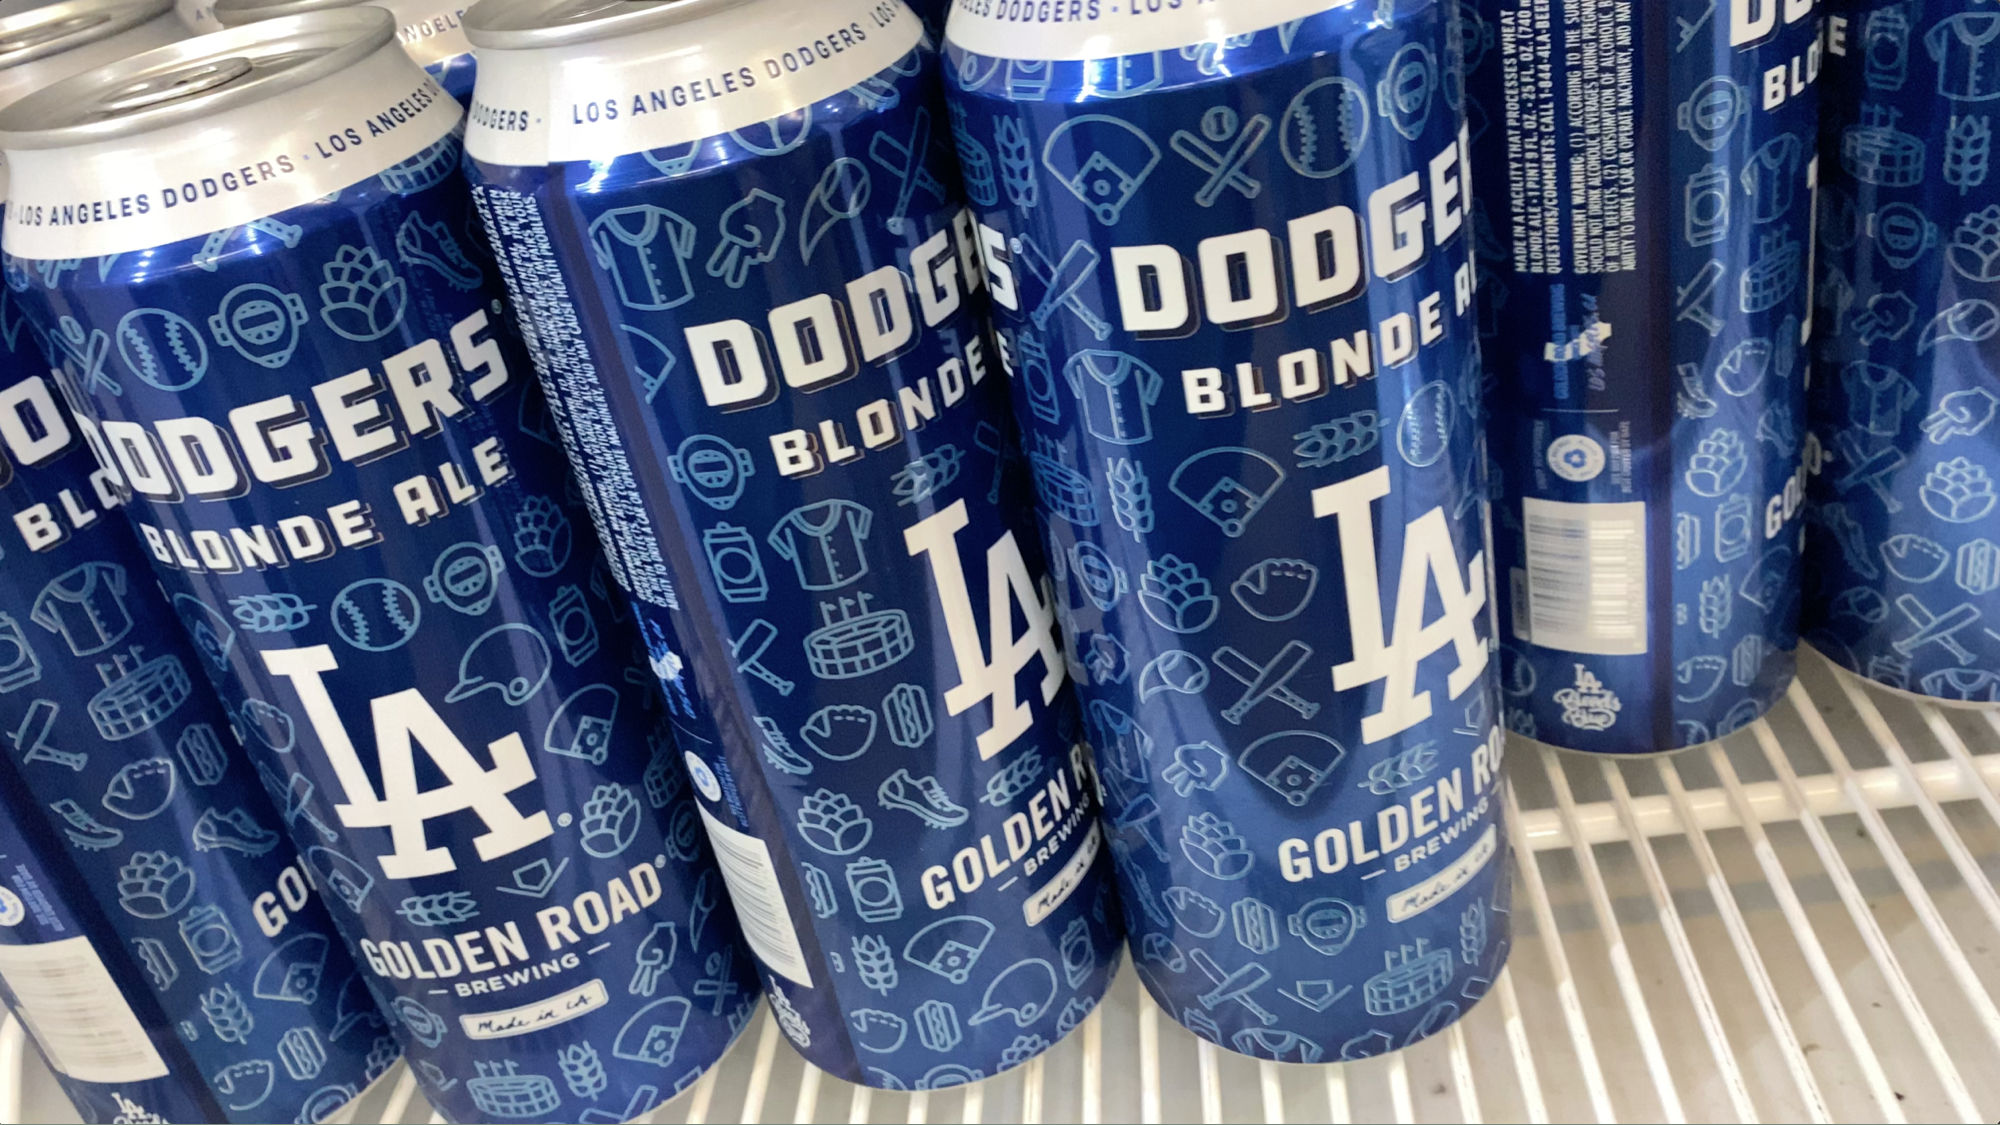 Golden Road Brewing Dodgers Blond Ale